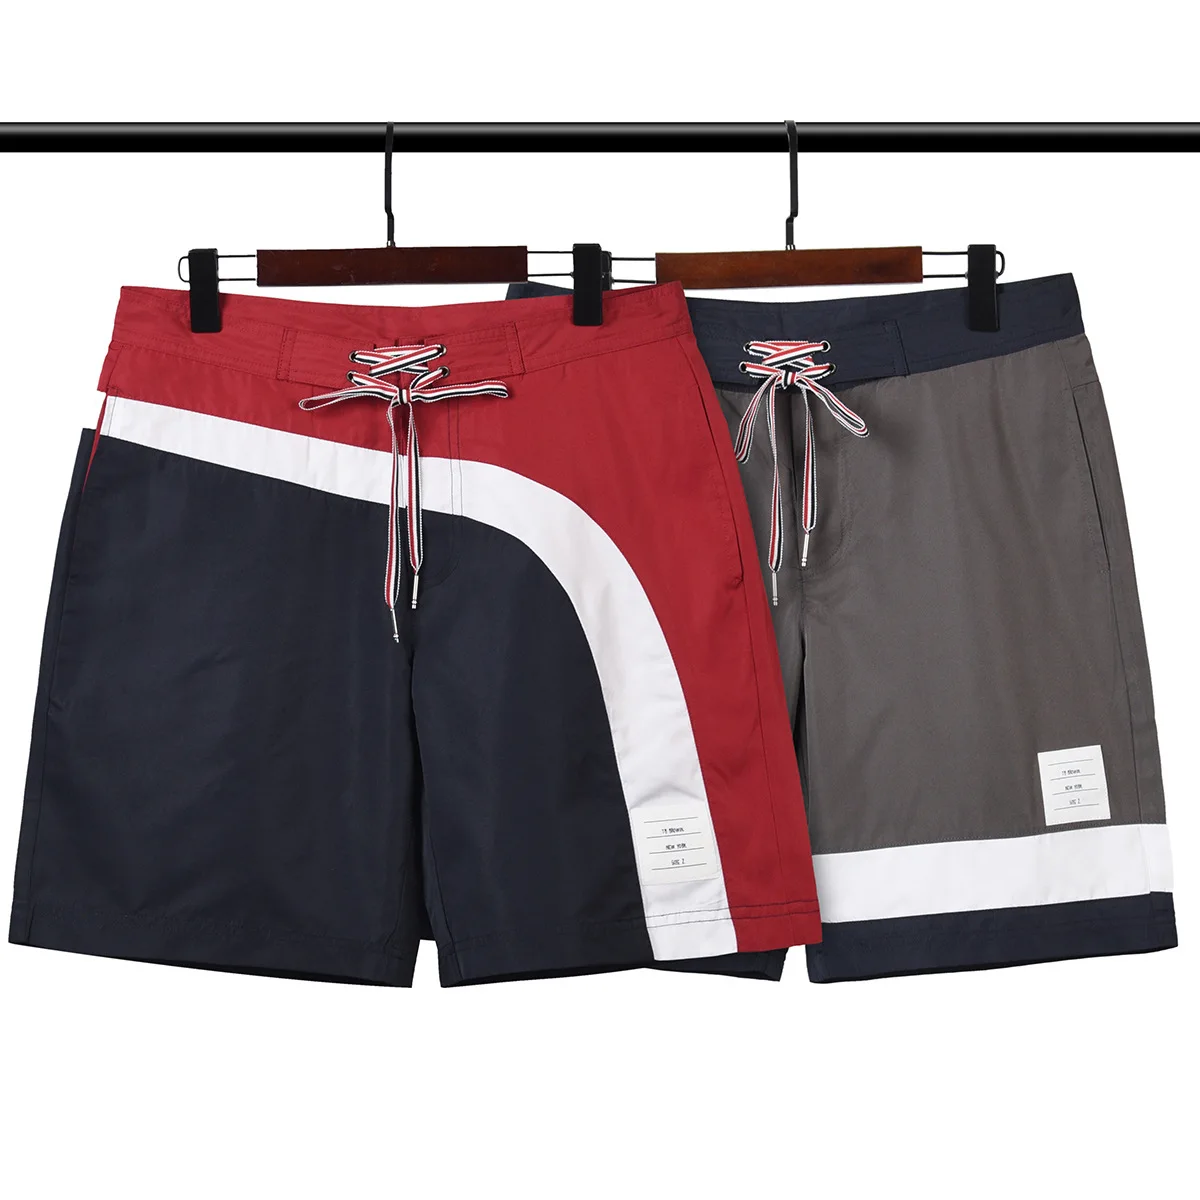 THOM BRIUN's new TB Beach pants Striped Split Pants for men and women sport casual pants